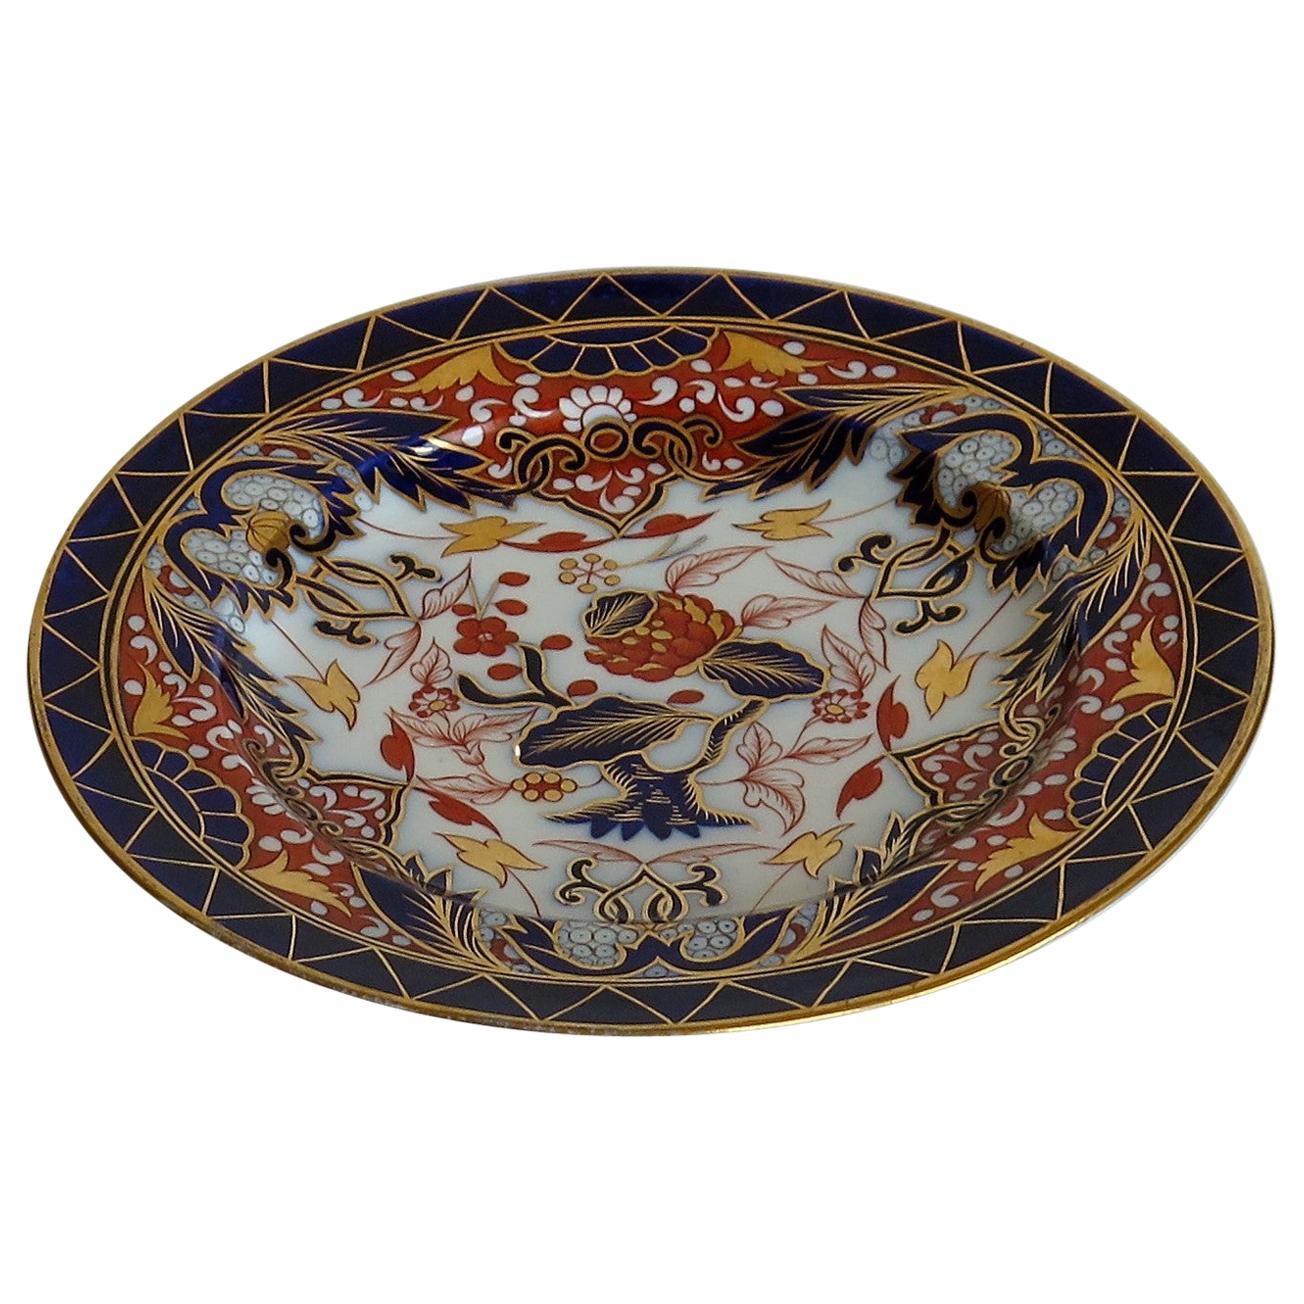 Early Davenport Porcelain Plate in Imari King's Pattern 330, English, circa 1820